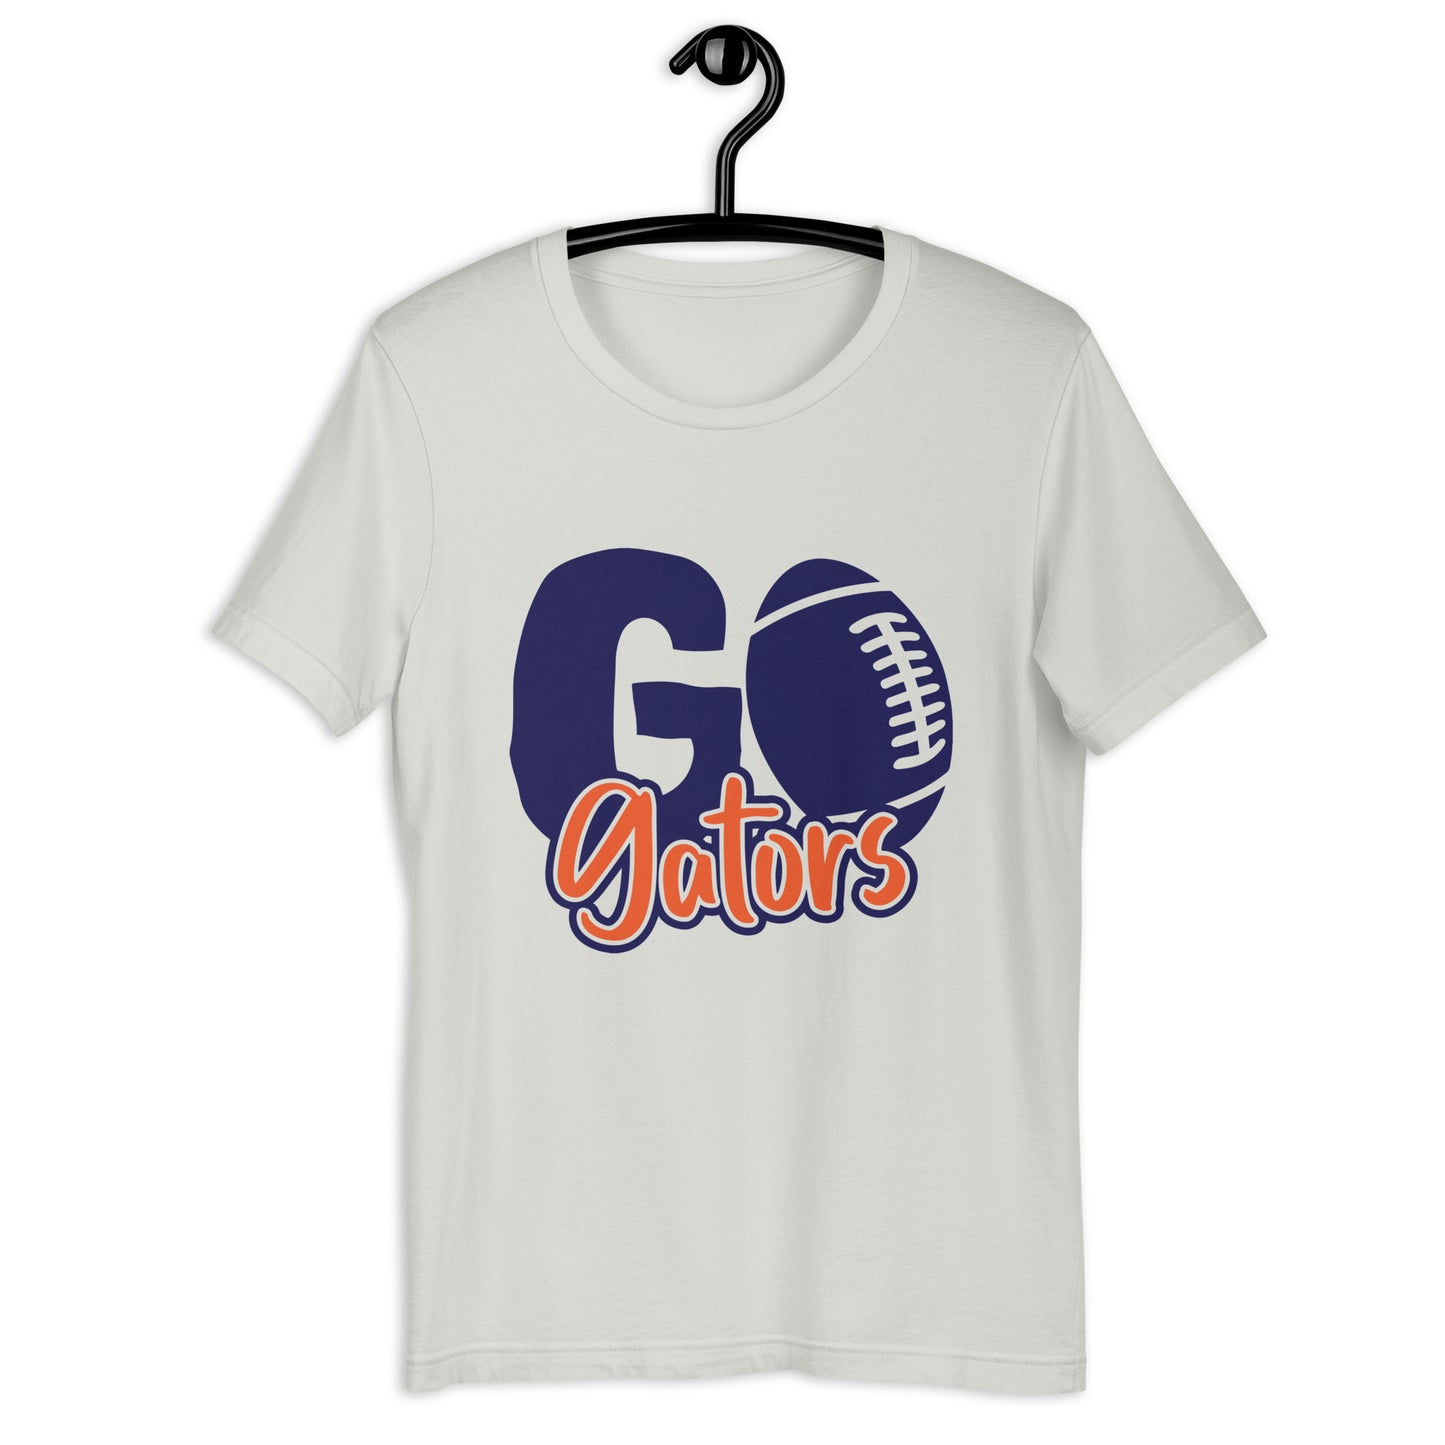 Go Gators t-shirt